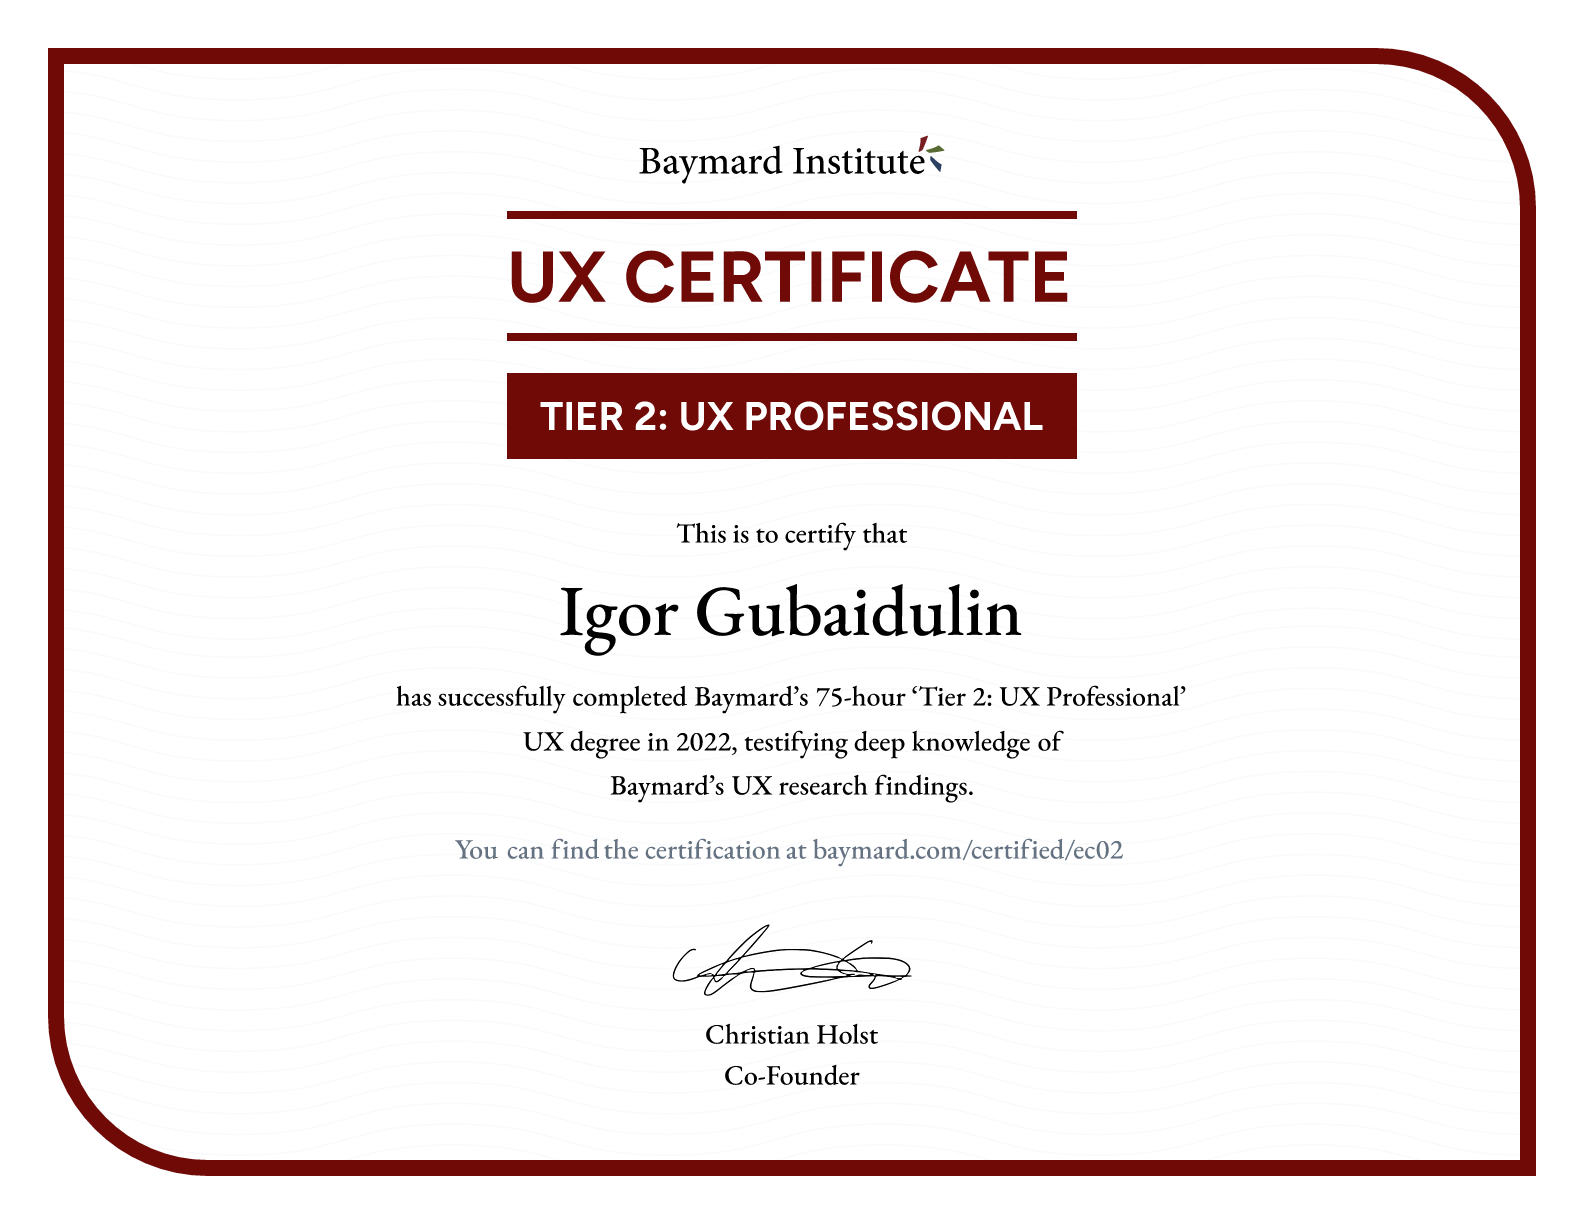 Igor Gubaidulin’s certificate